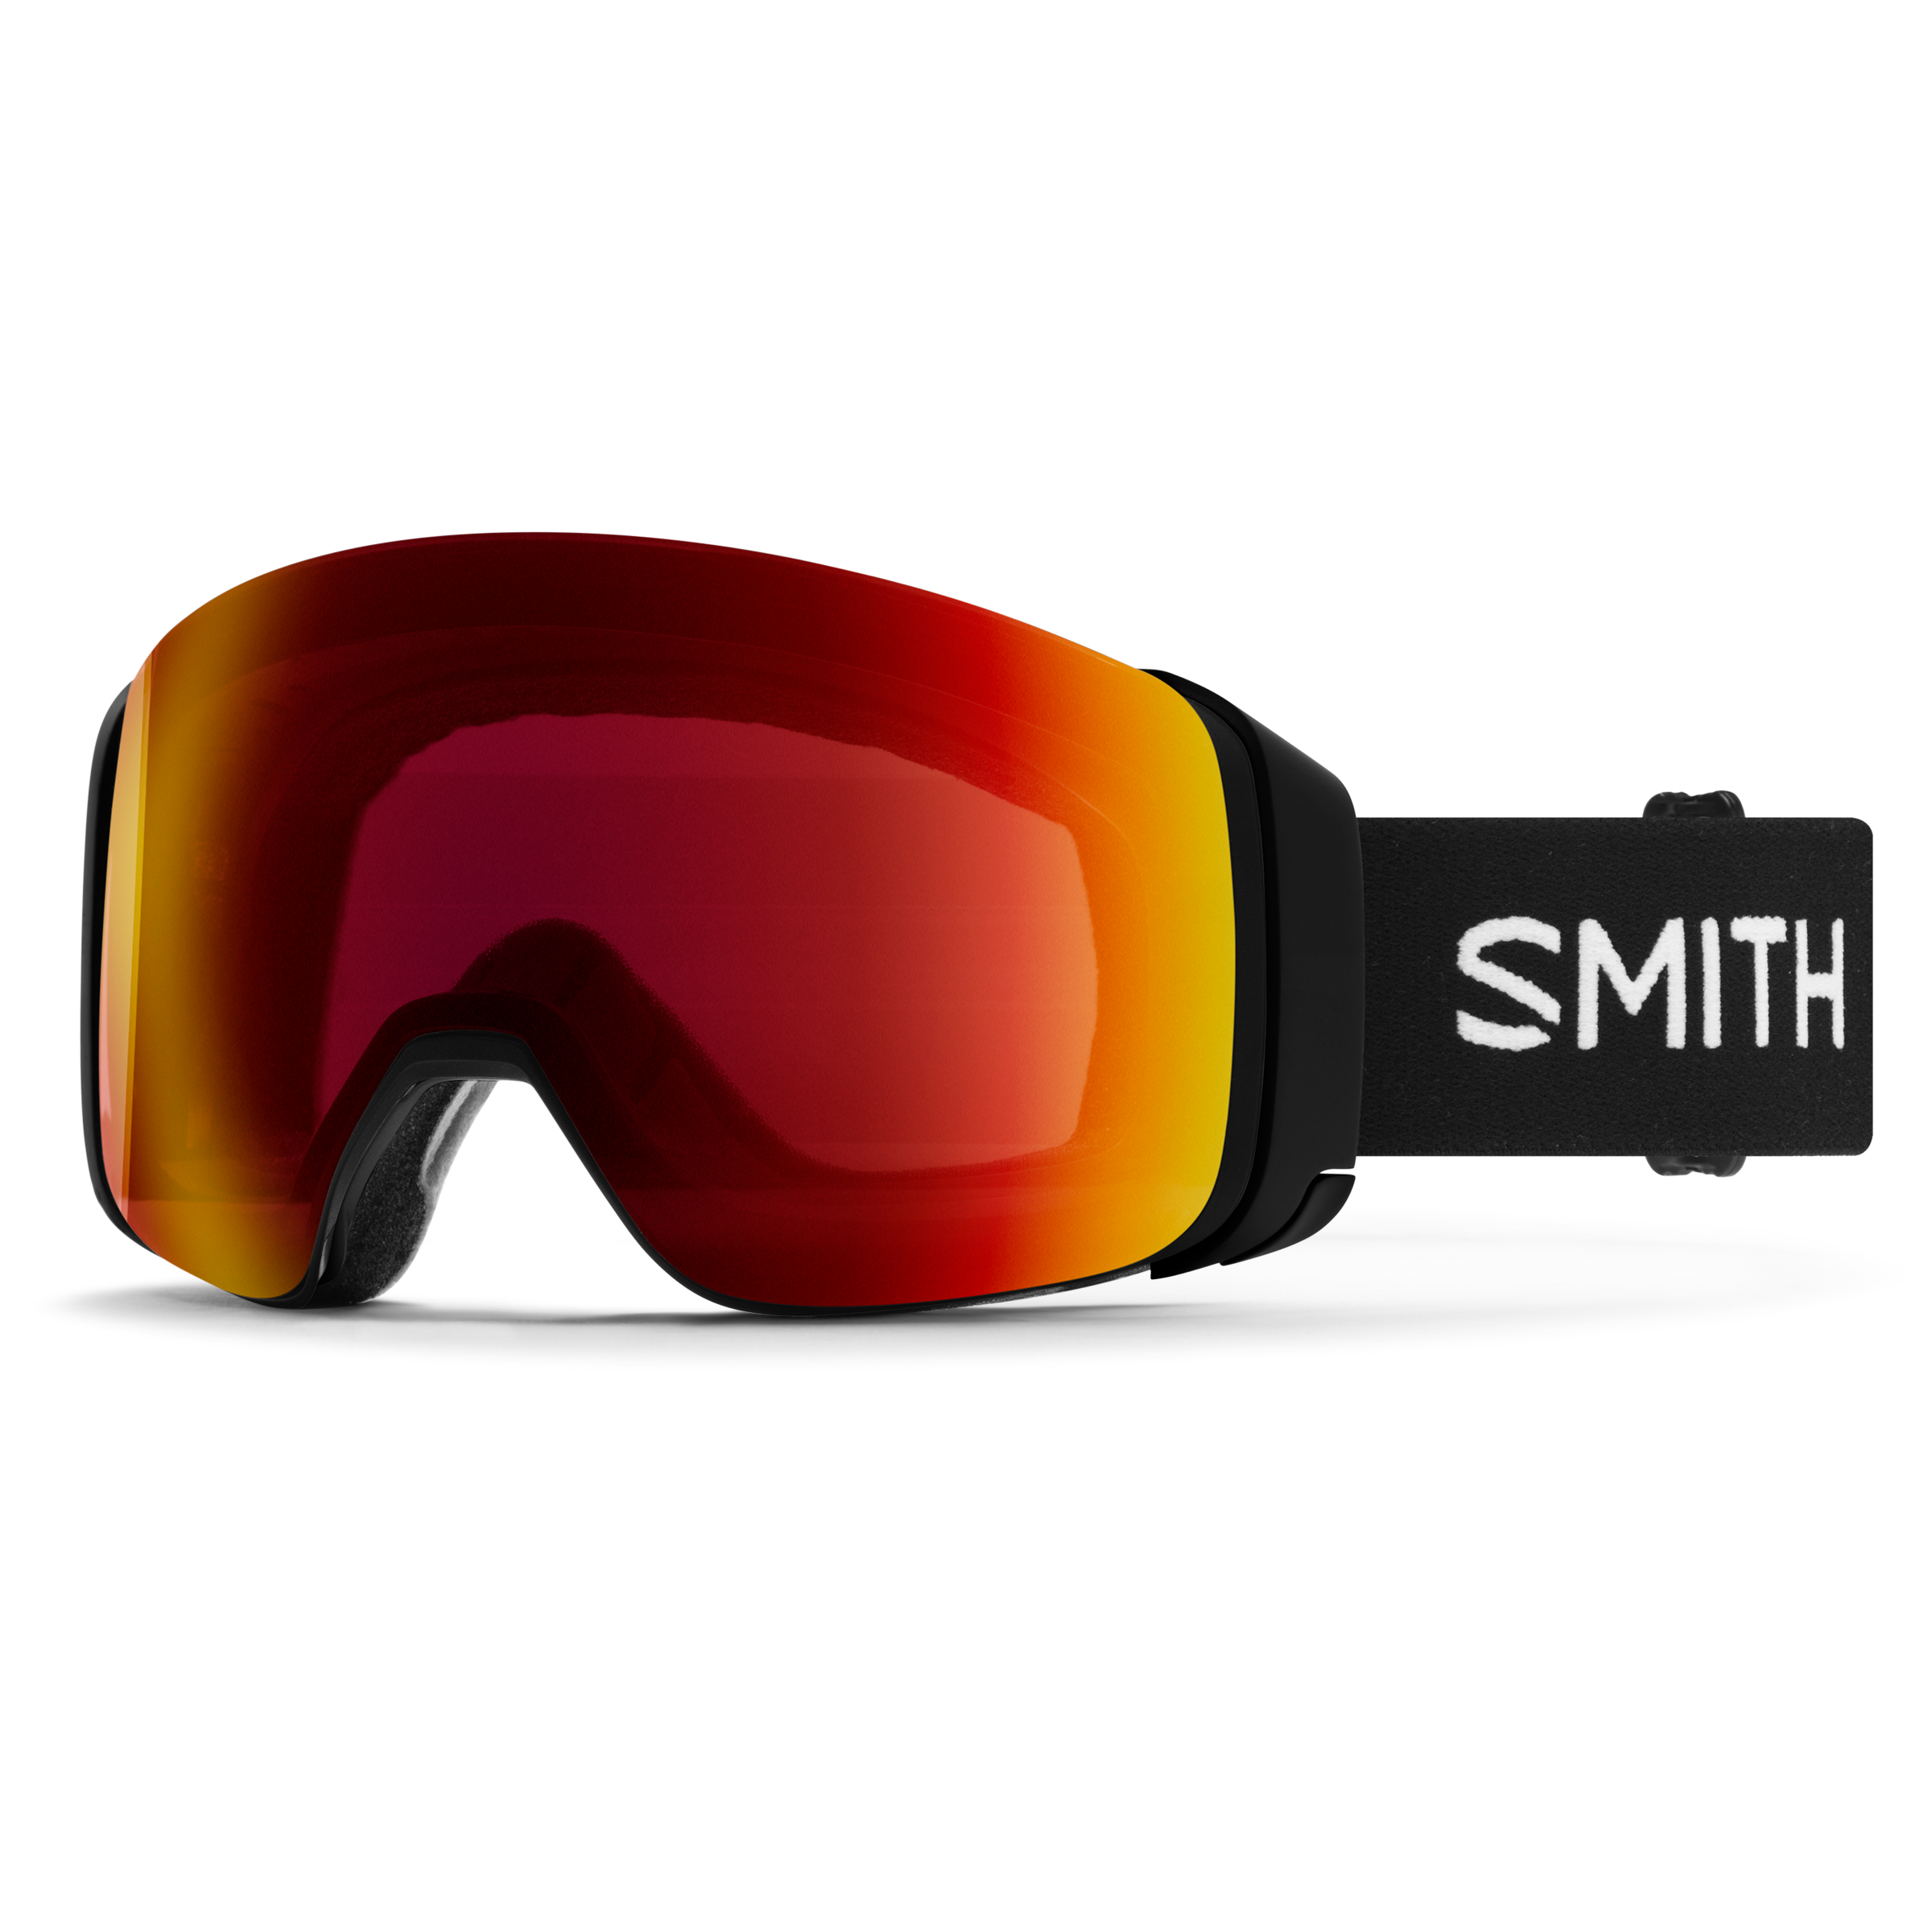 Buy 4D MAG starting Smith 340.00 USD at | Optics